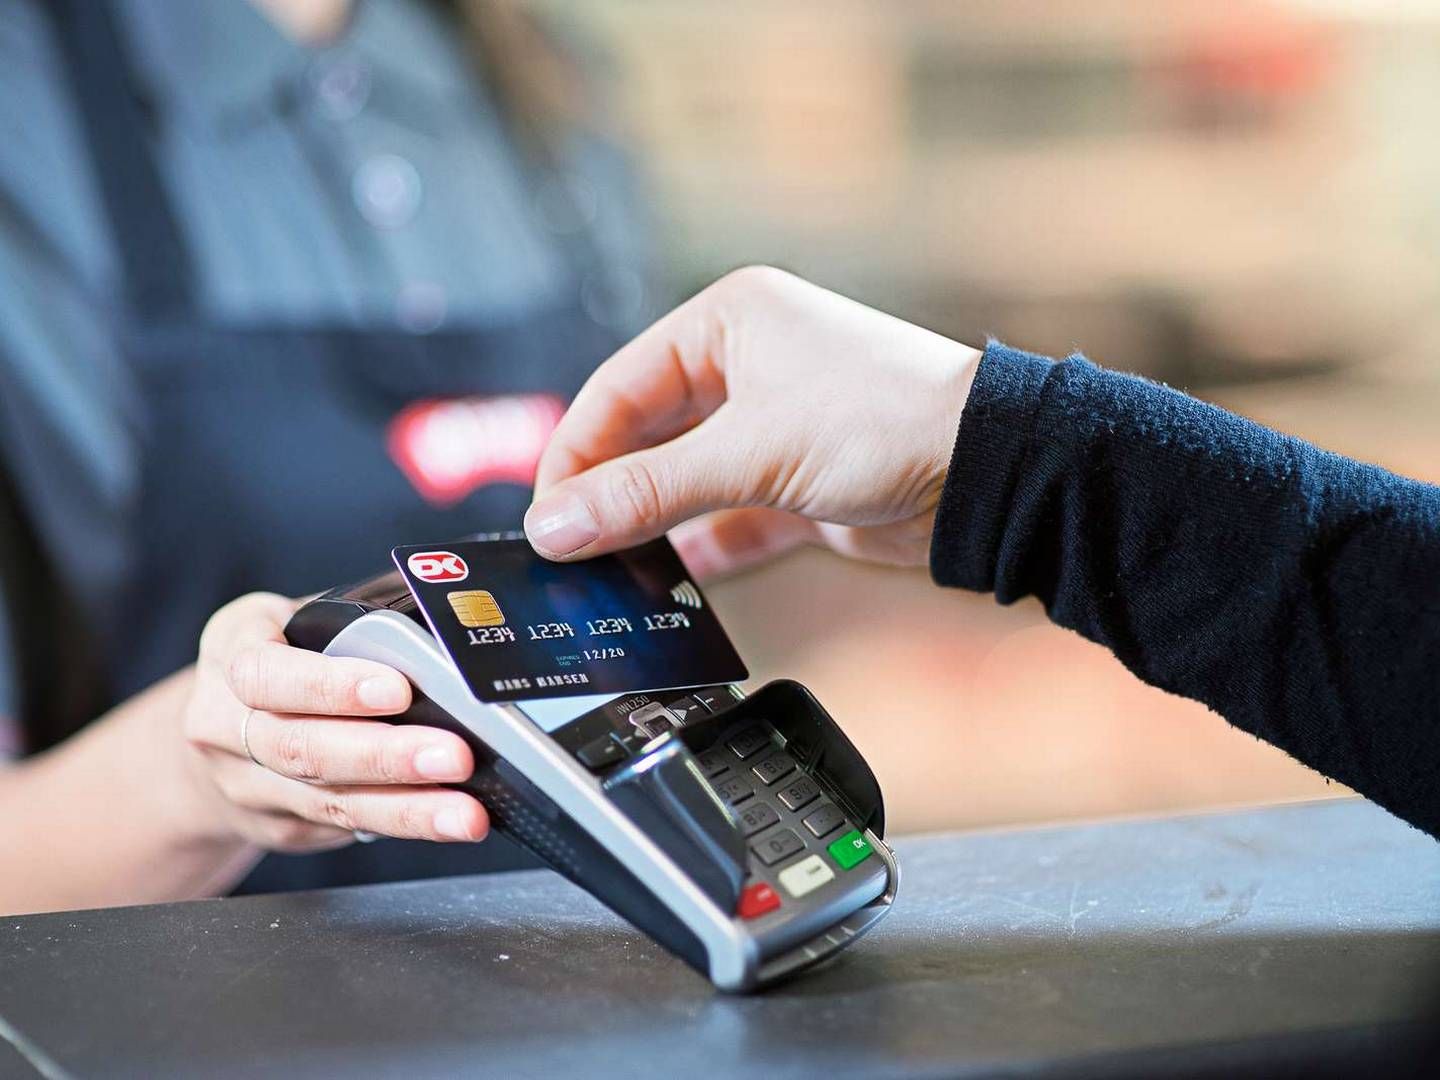 Dankort-gebyrene har stor betydning for kiosker, barer og bagerier med mange små betalinger. | Foto: Nets/Pr